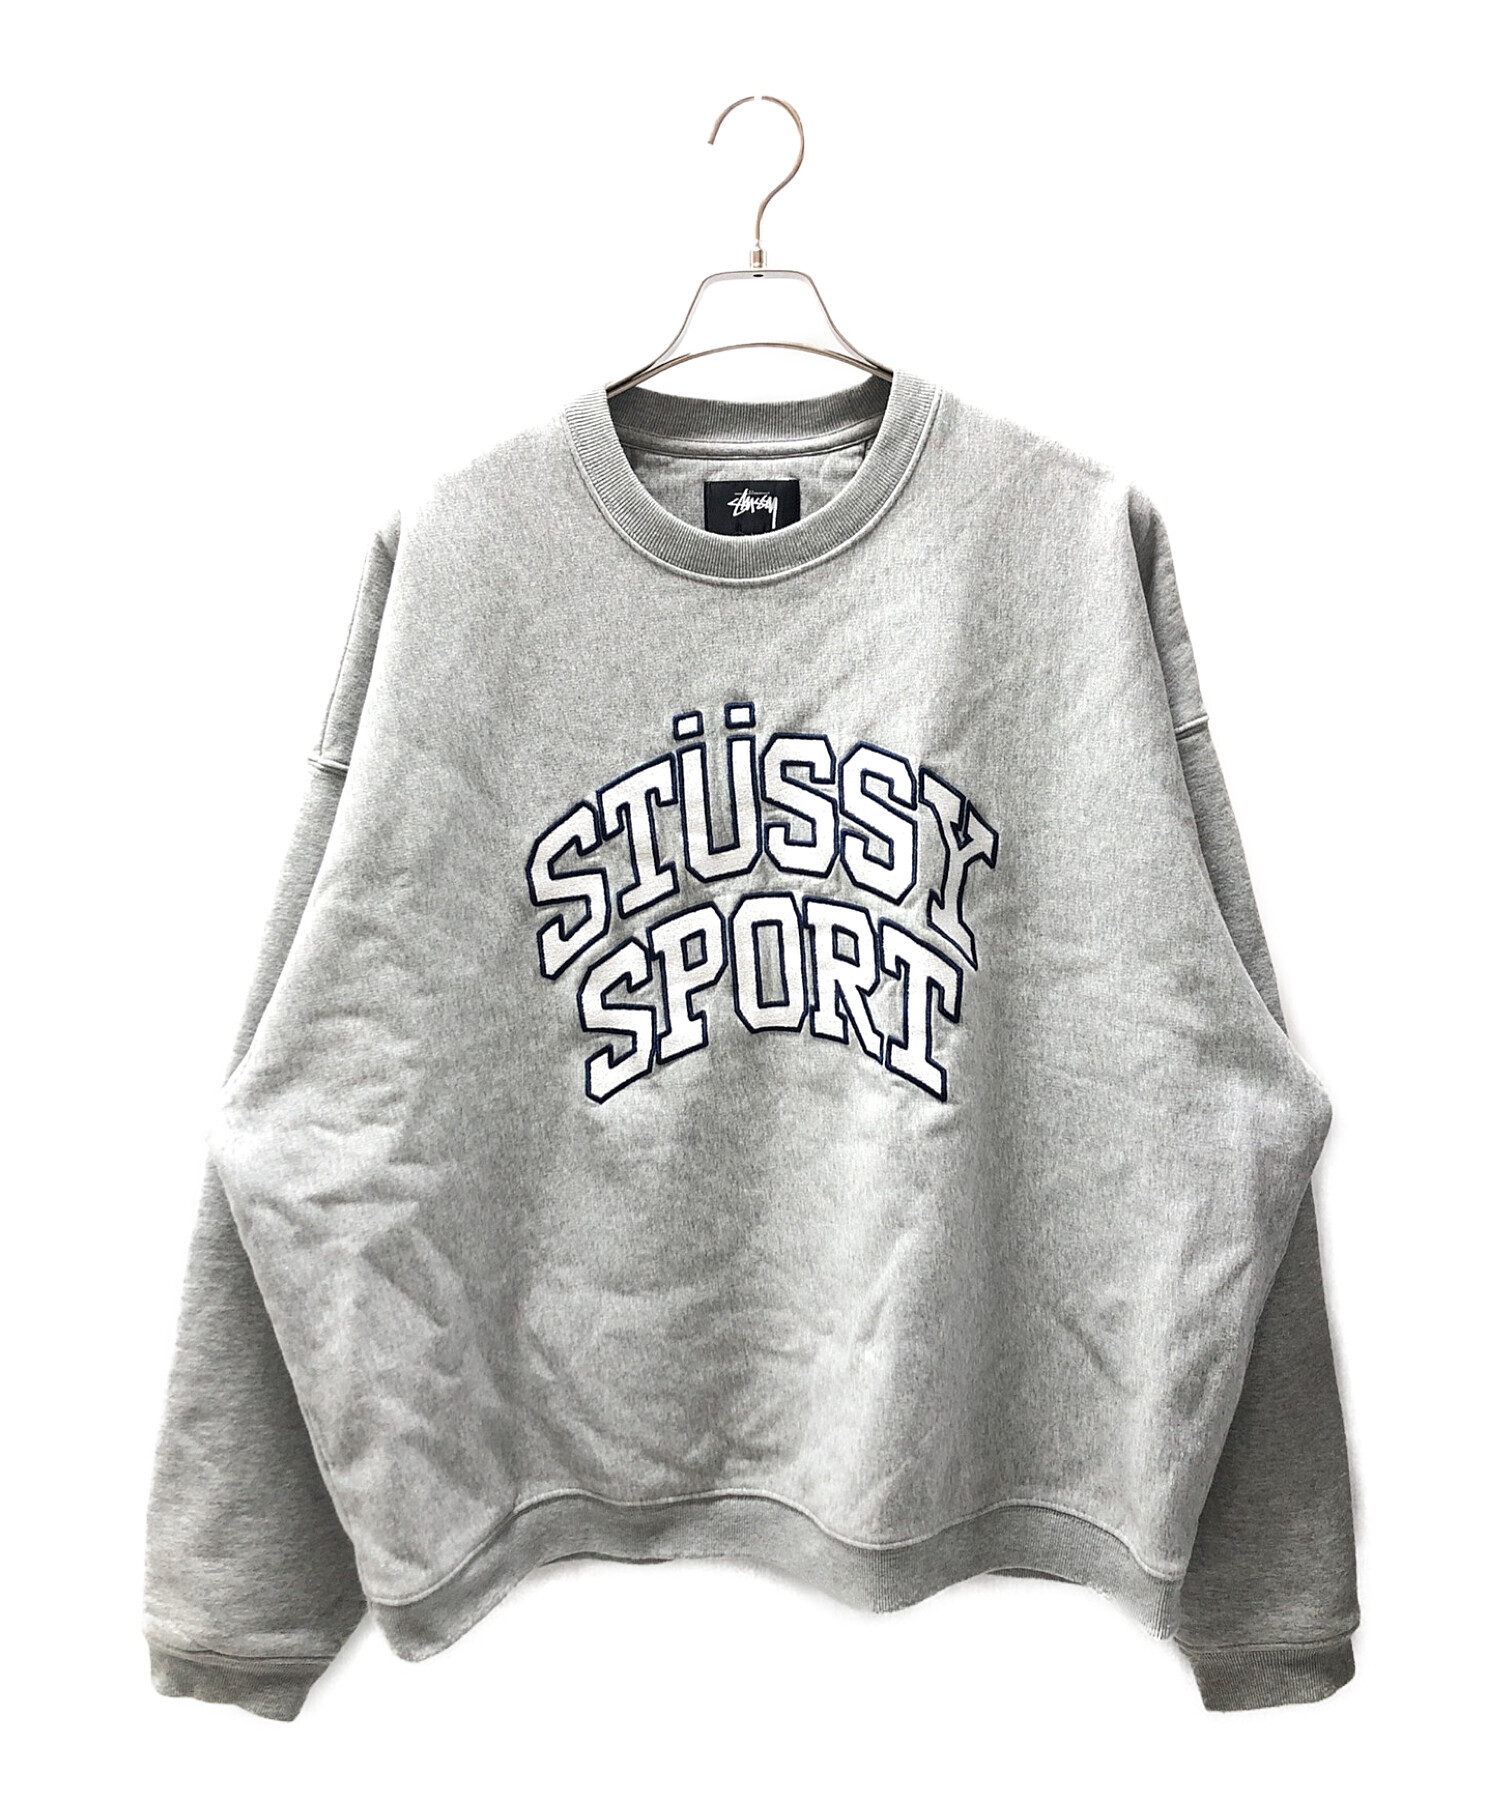 stussy sport スウェット - スウェット